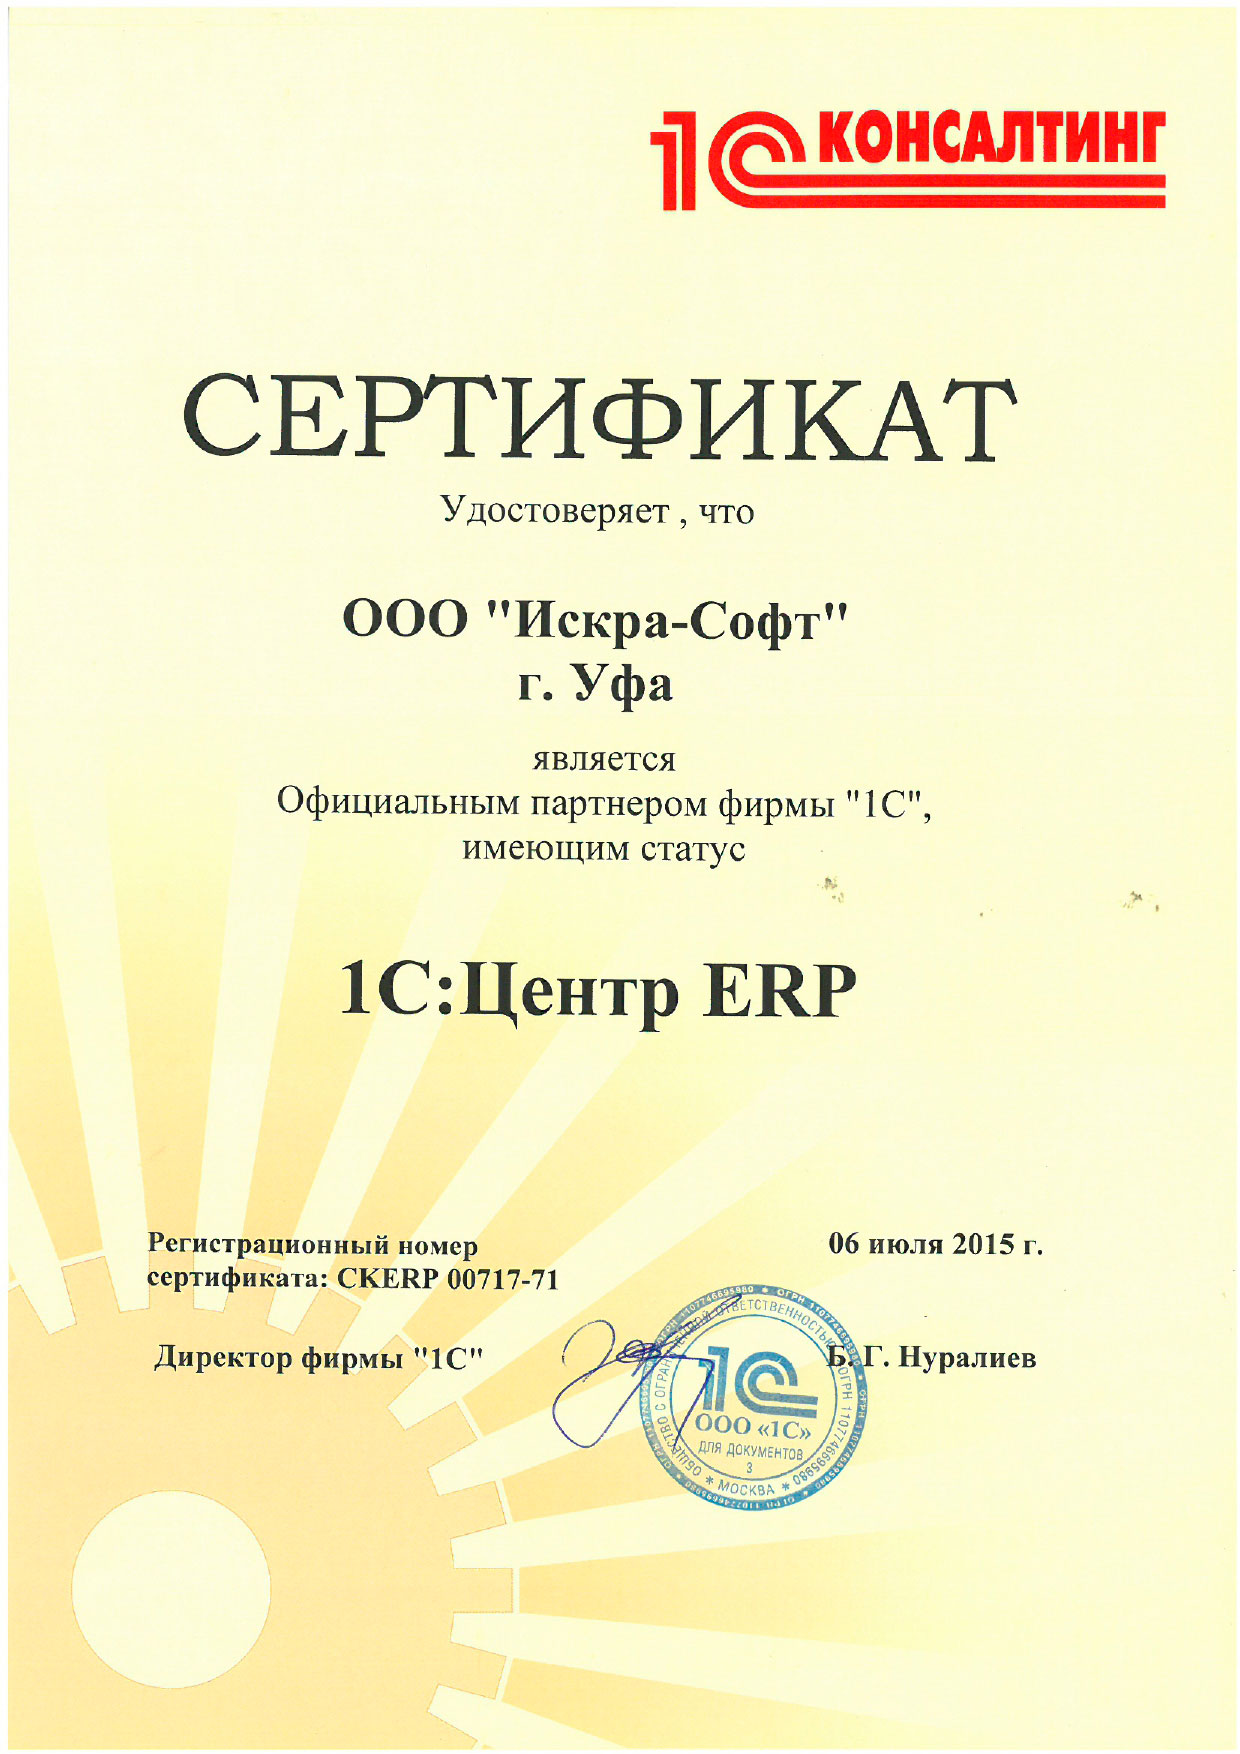 1С: Центр ERP